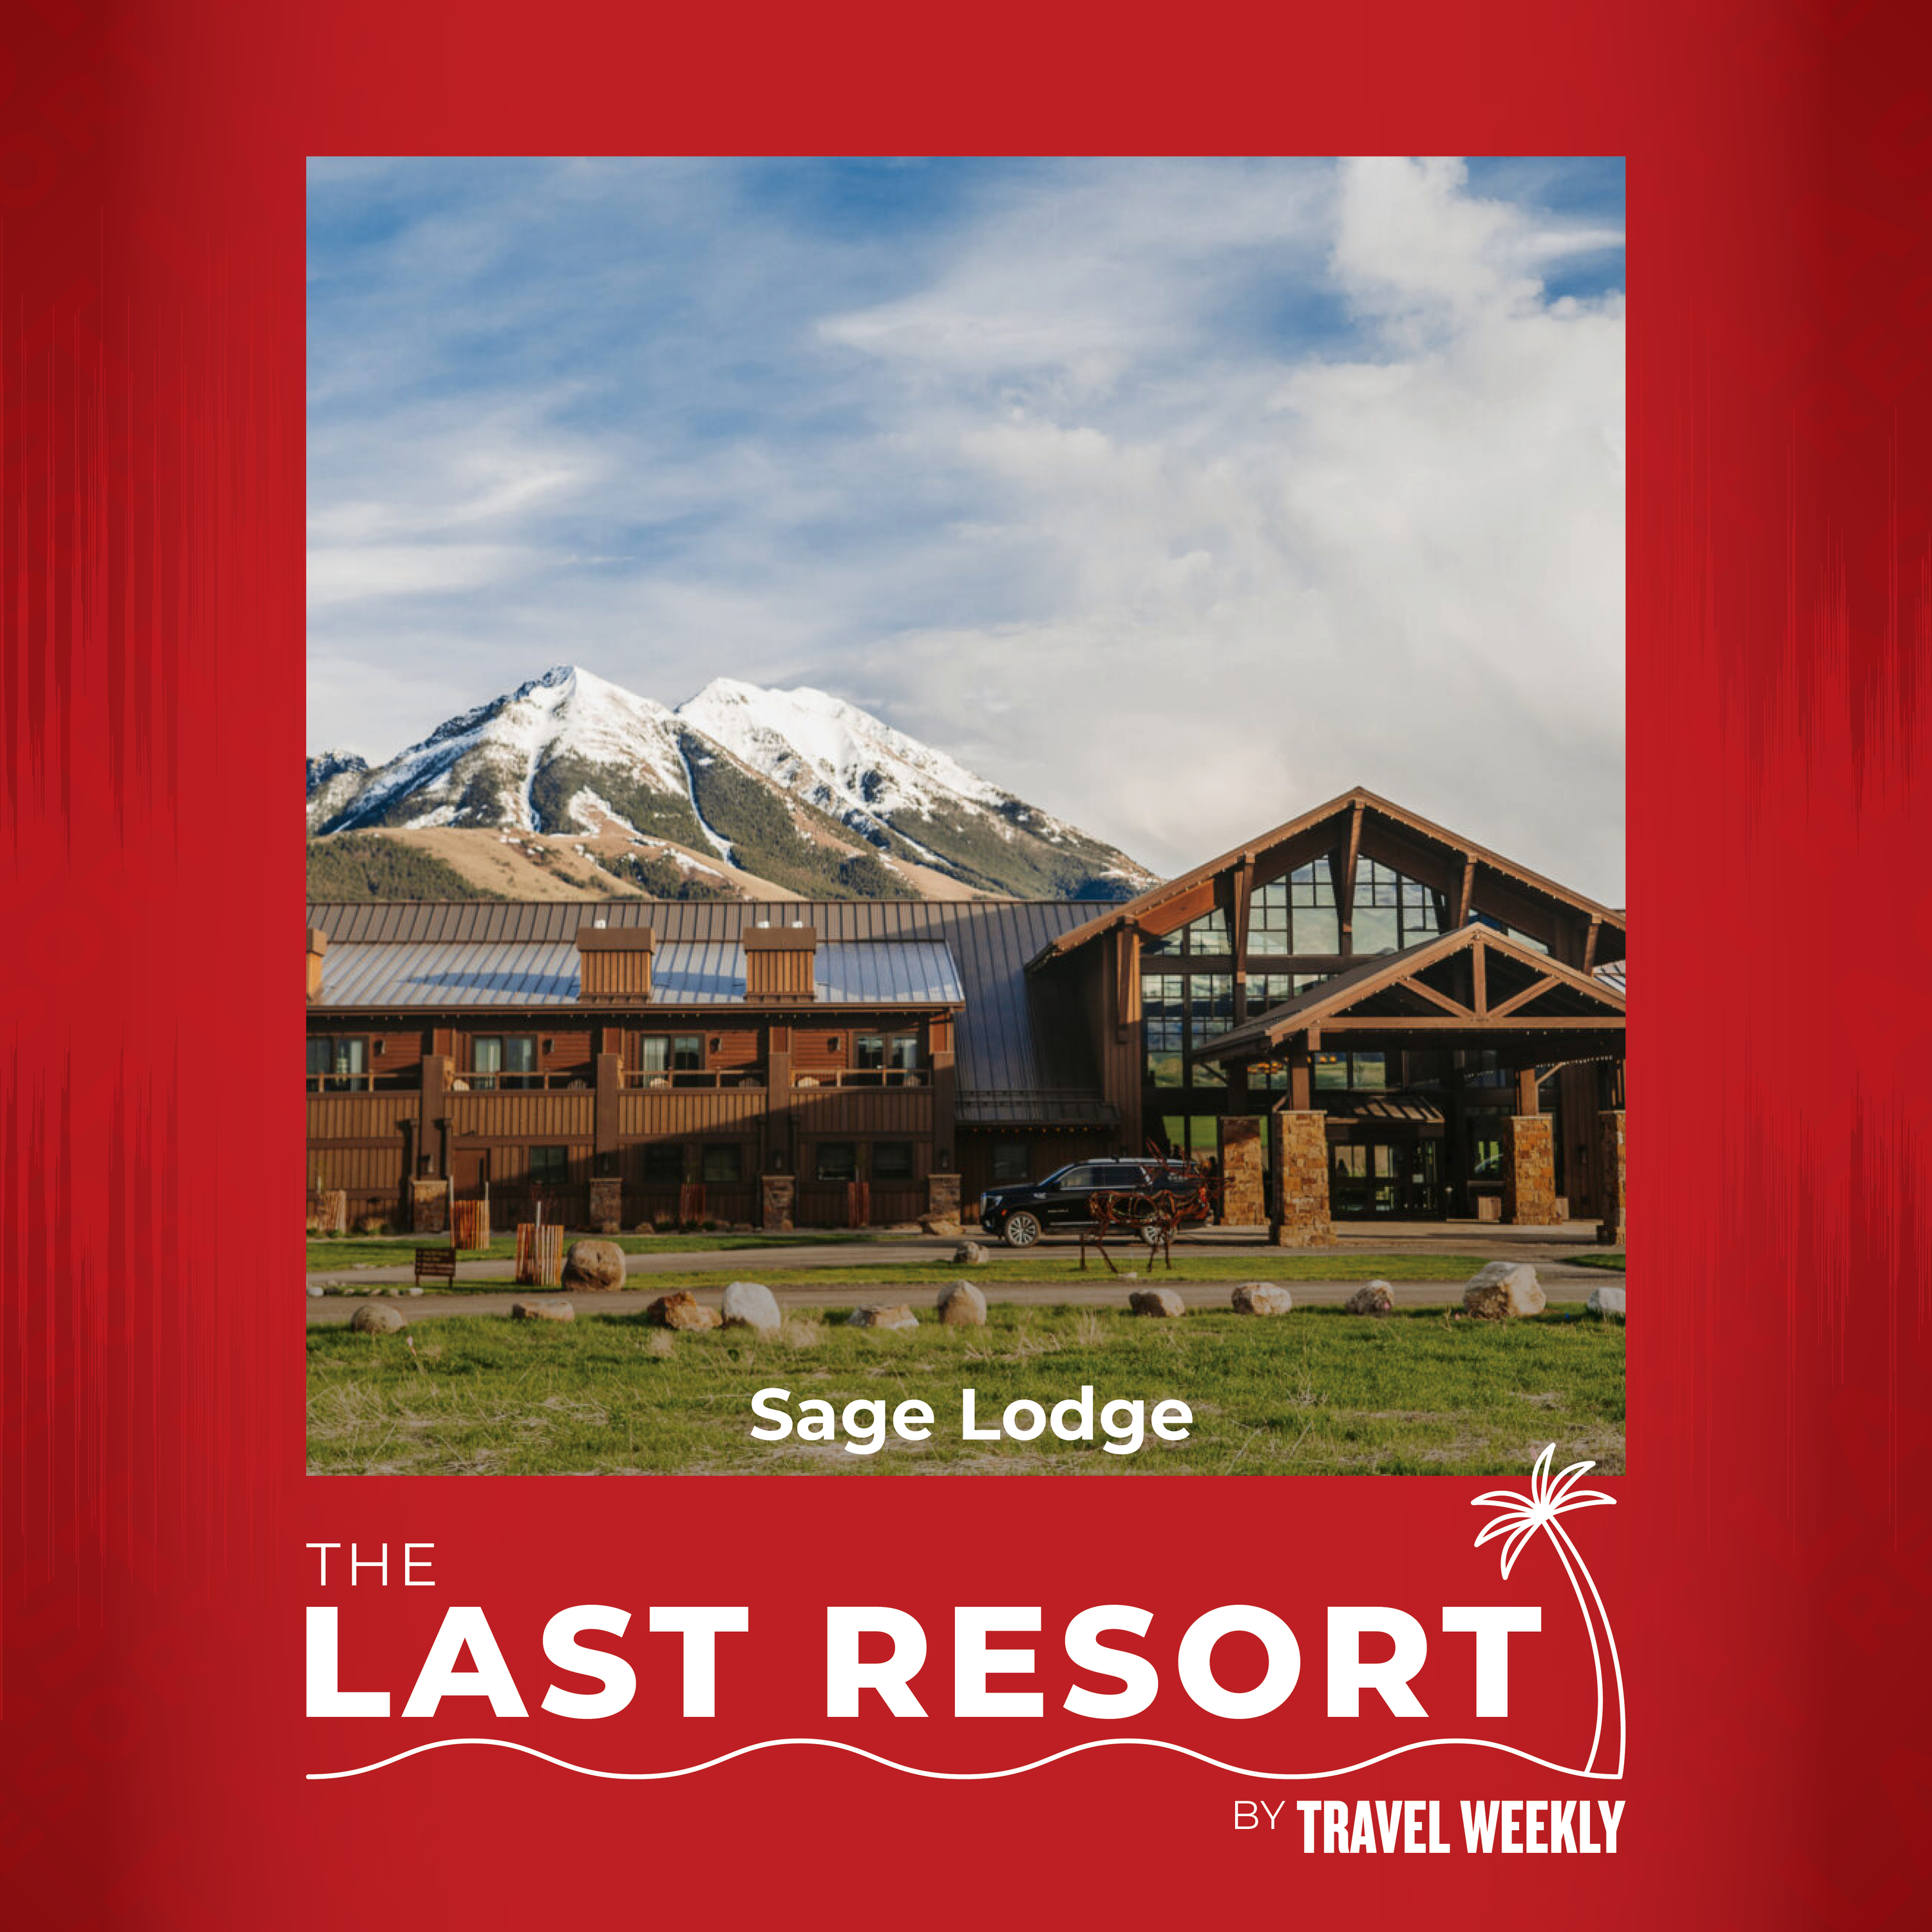 The Last Resort: Sage Lodge